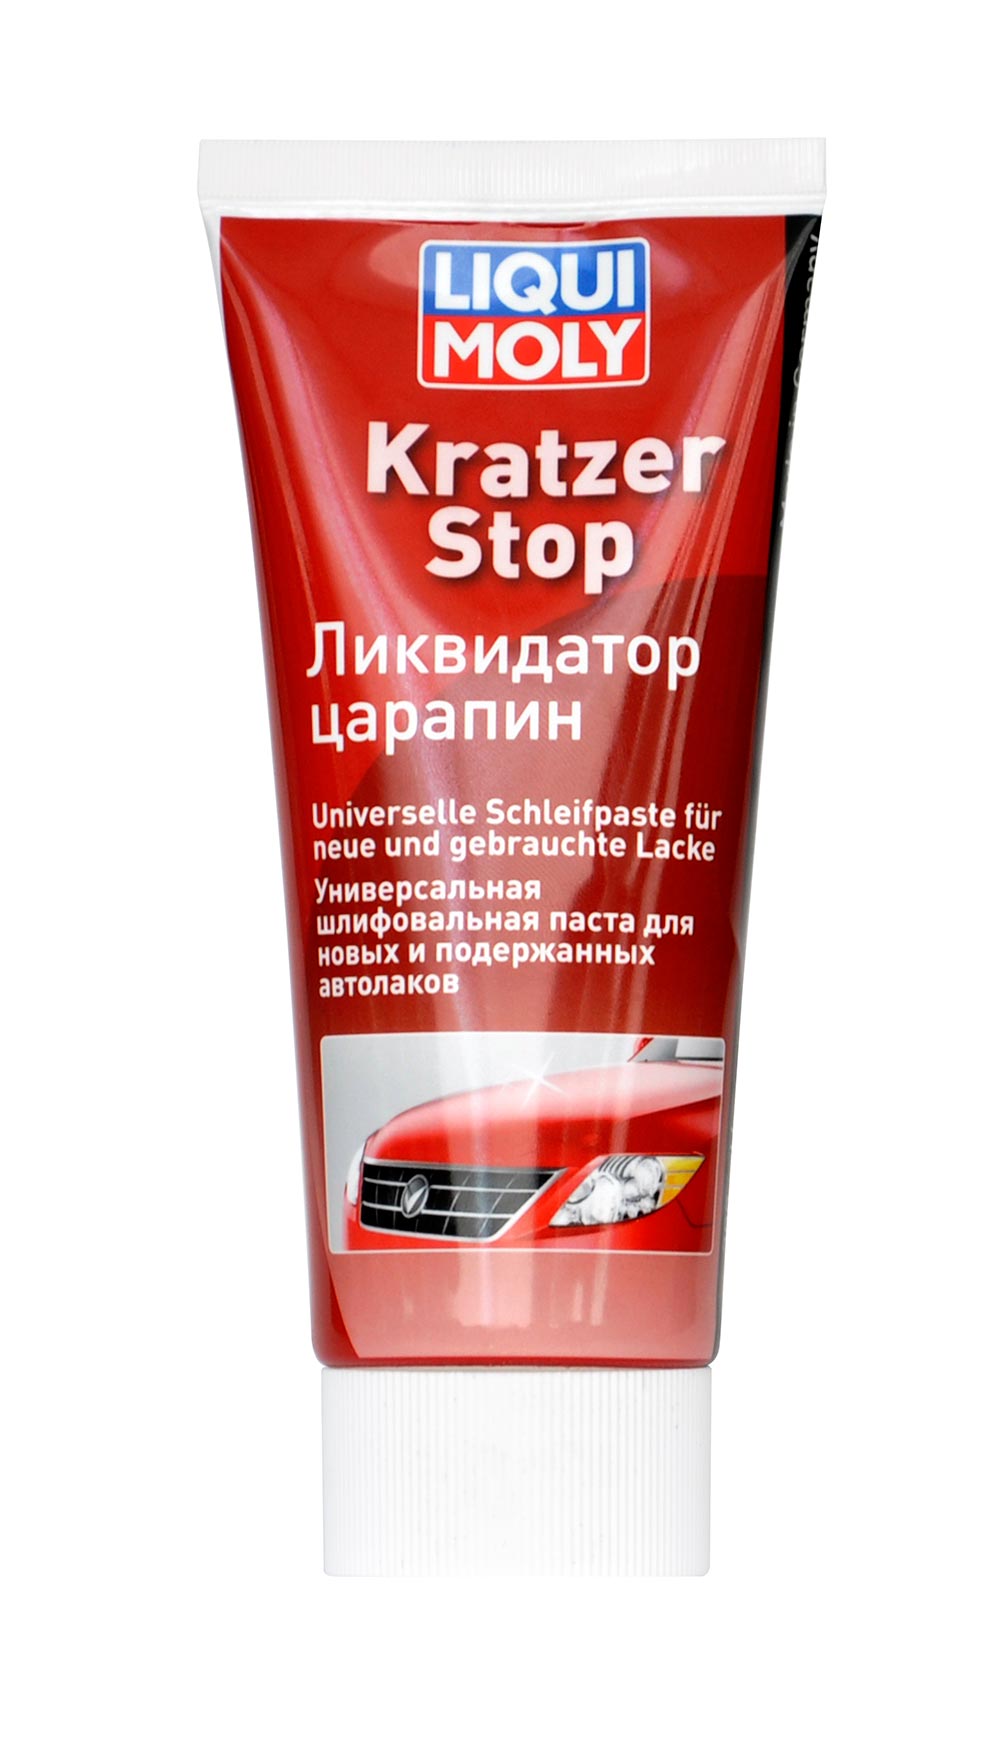 Ликвидатор царапин Kratzer Stop 0.200мл